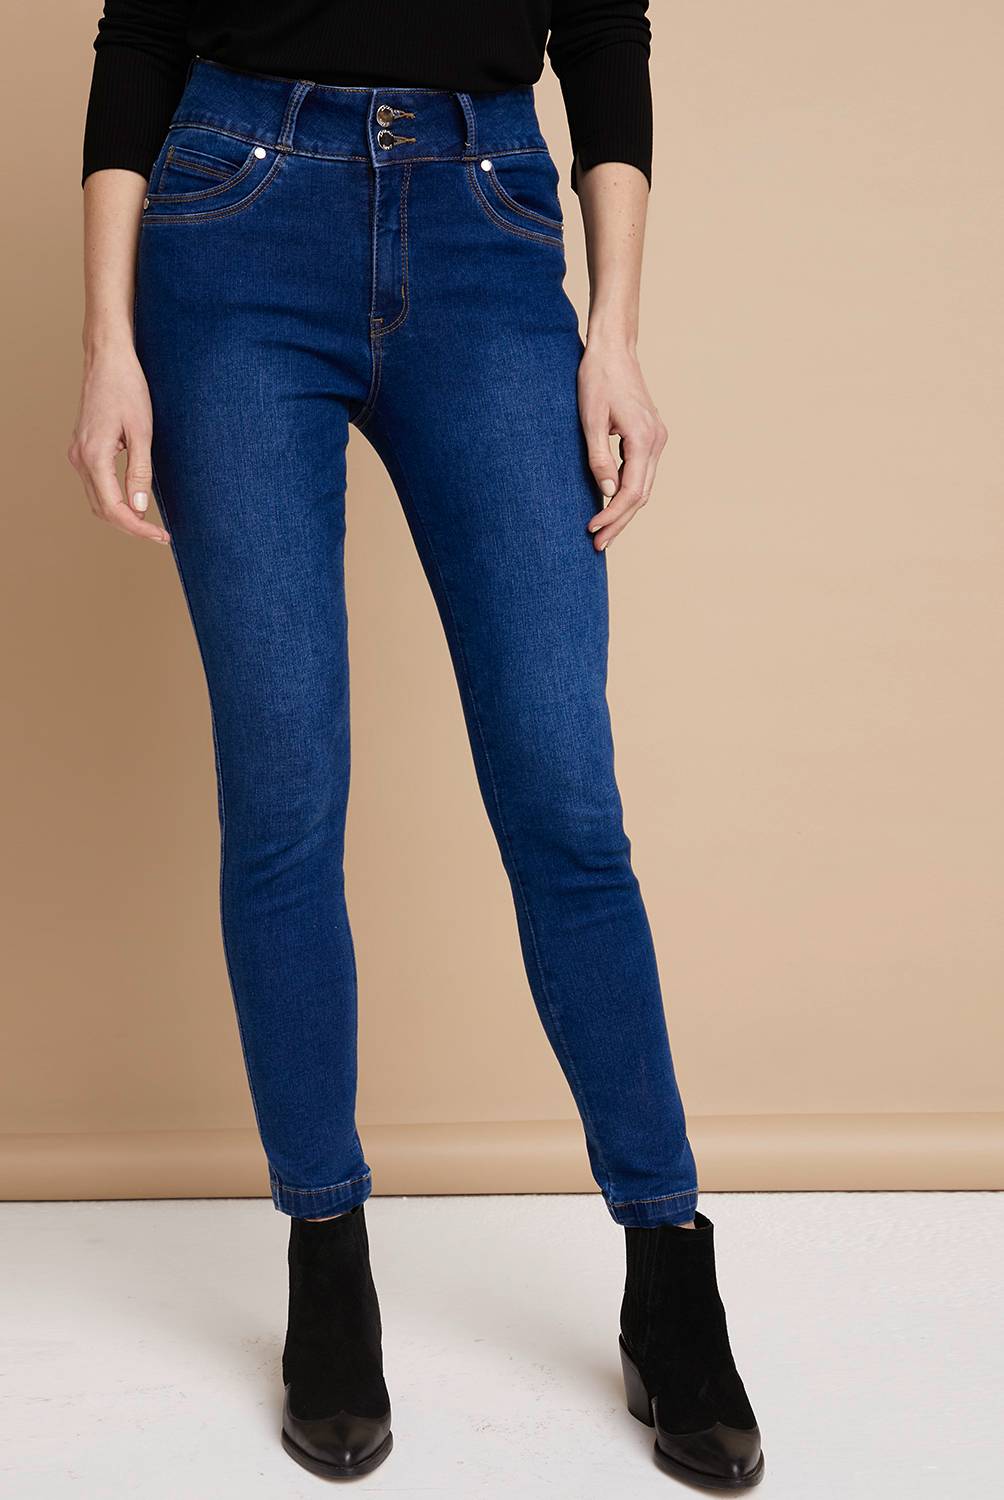 APOLOGY - Jeans Skinny Tiro Medio Denim Mujer Apology